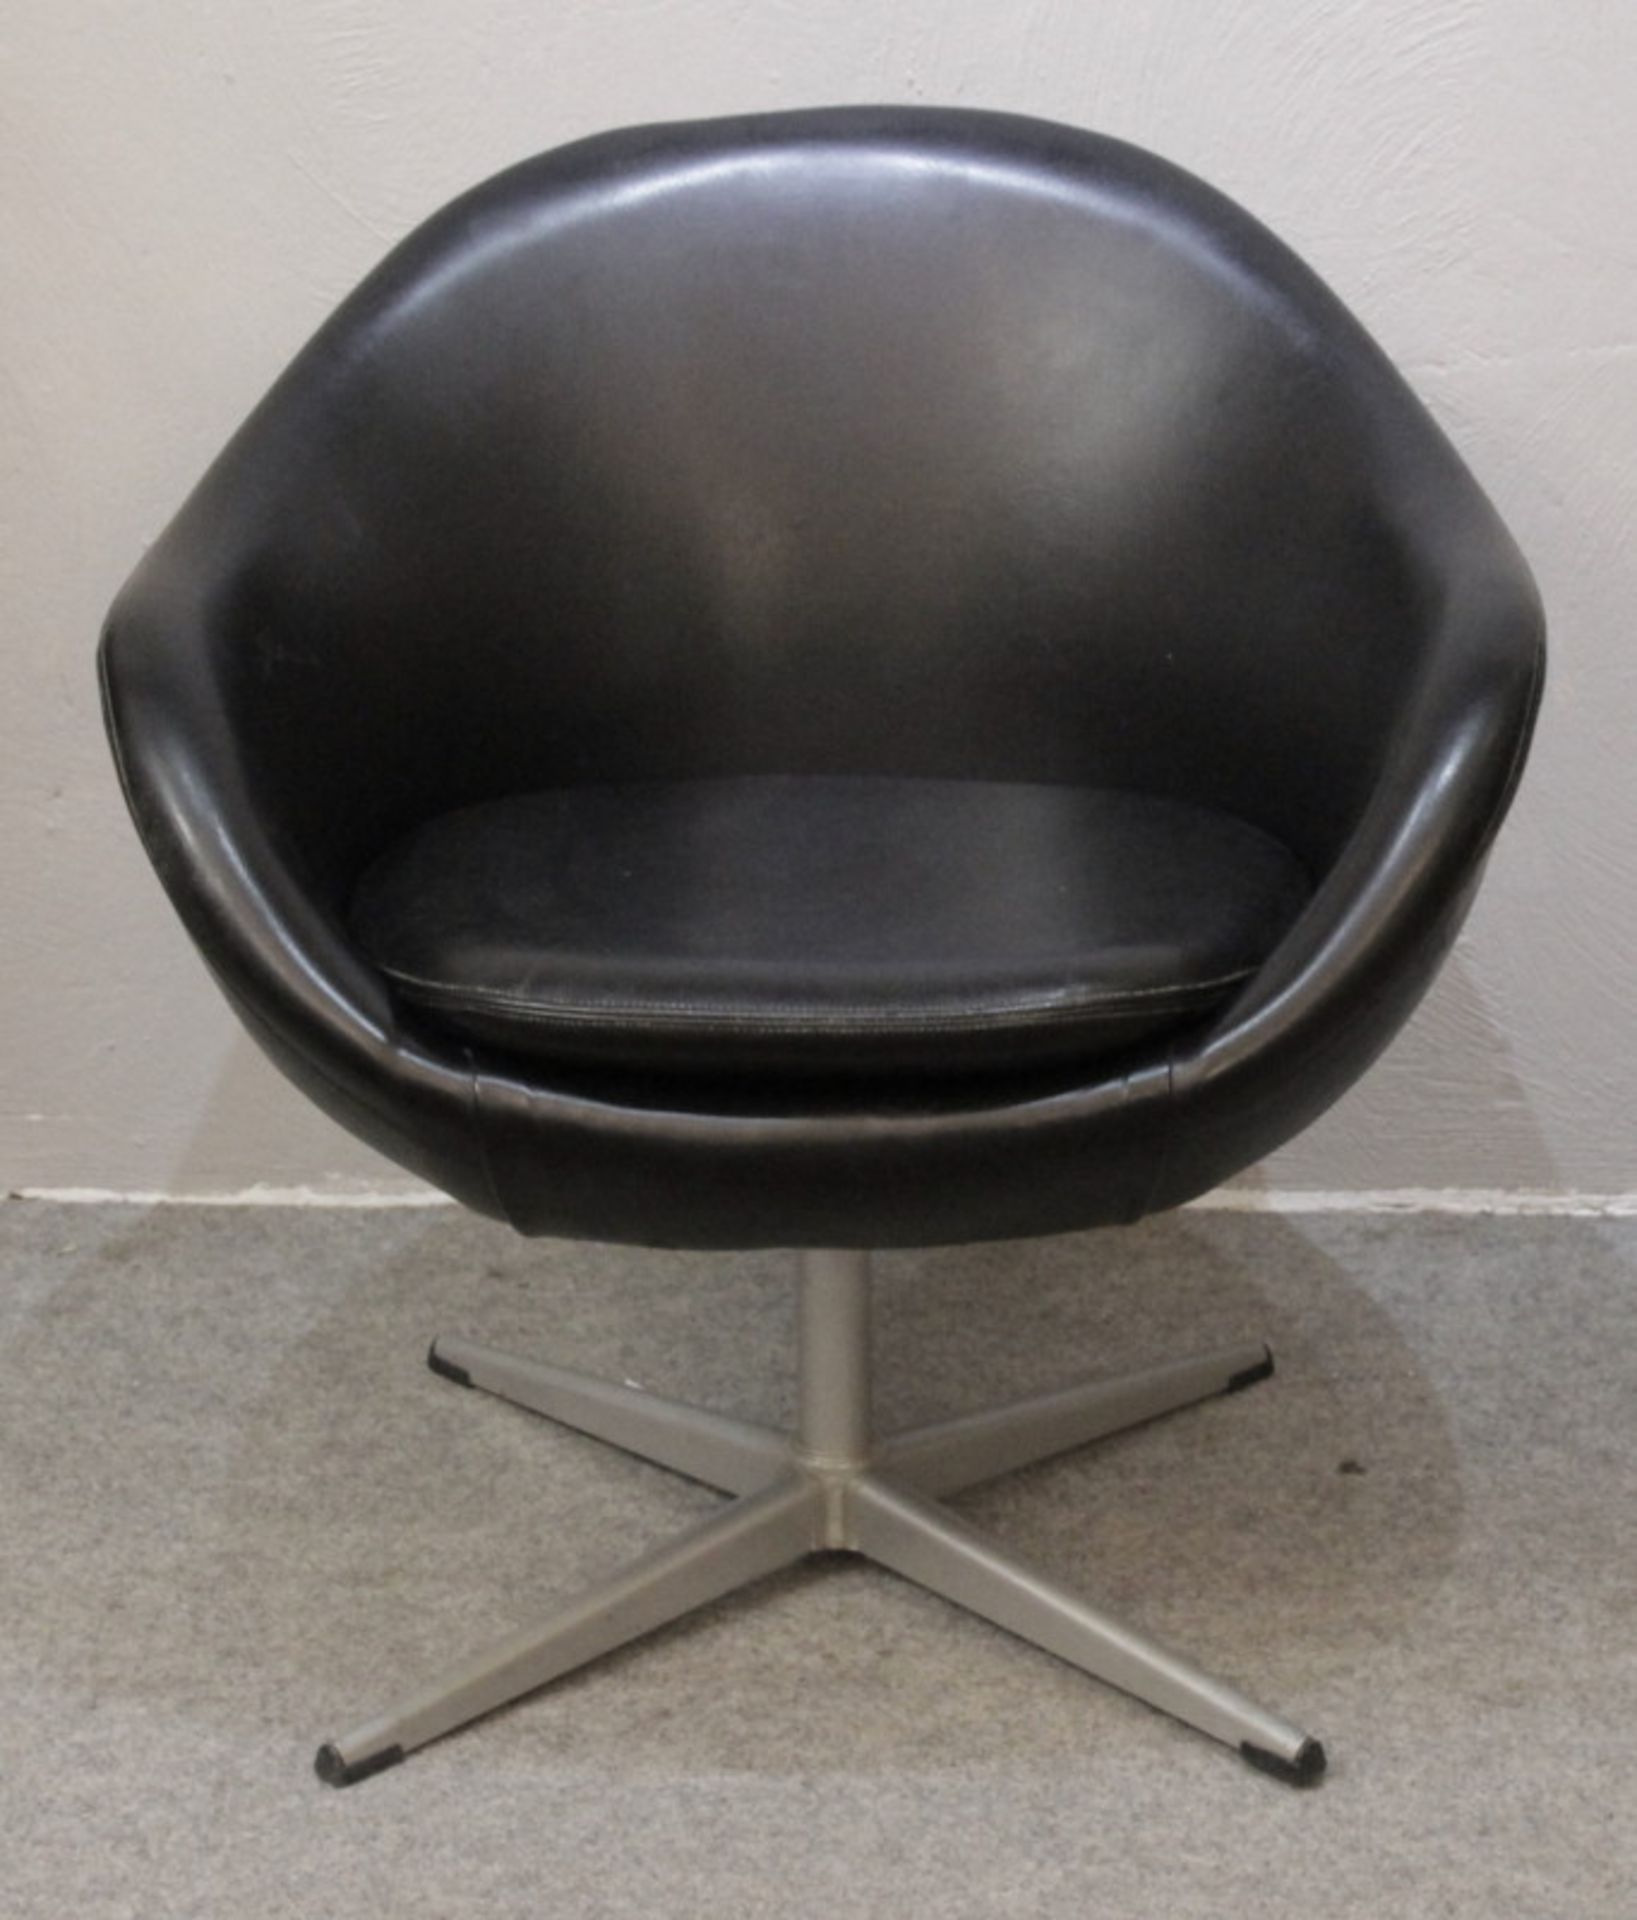 Lounge Chair nach Hee Welling & HAY, Dänemark, 50er Jahre - Image 2 of 2